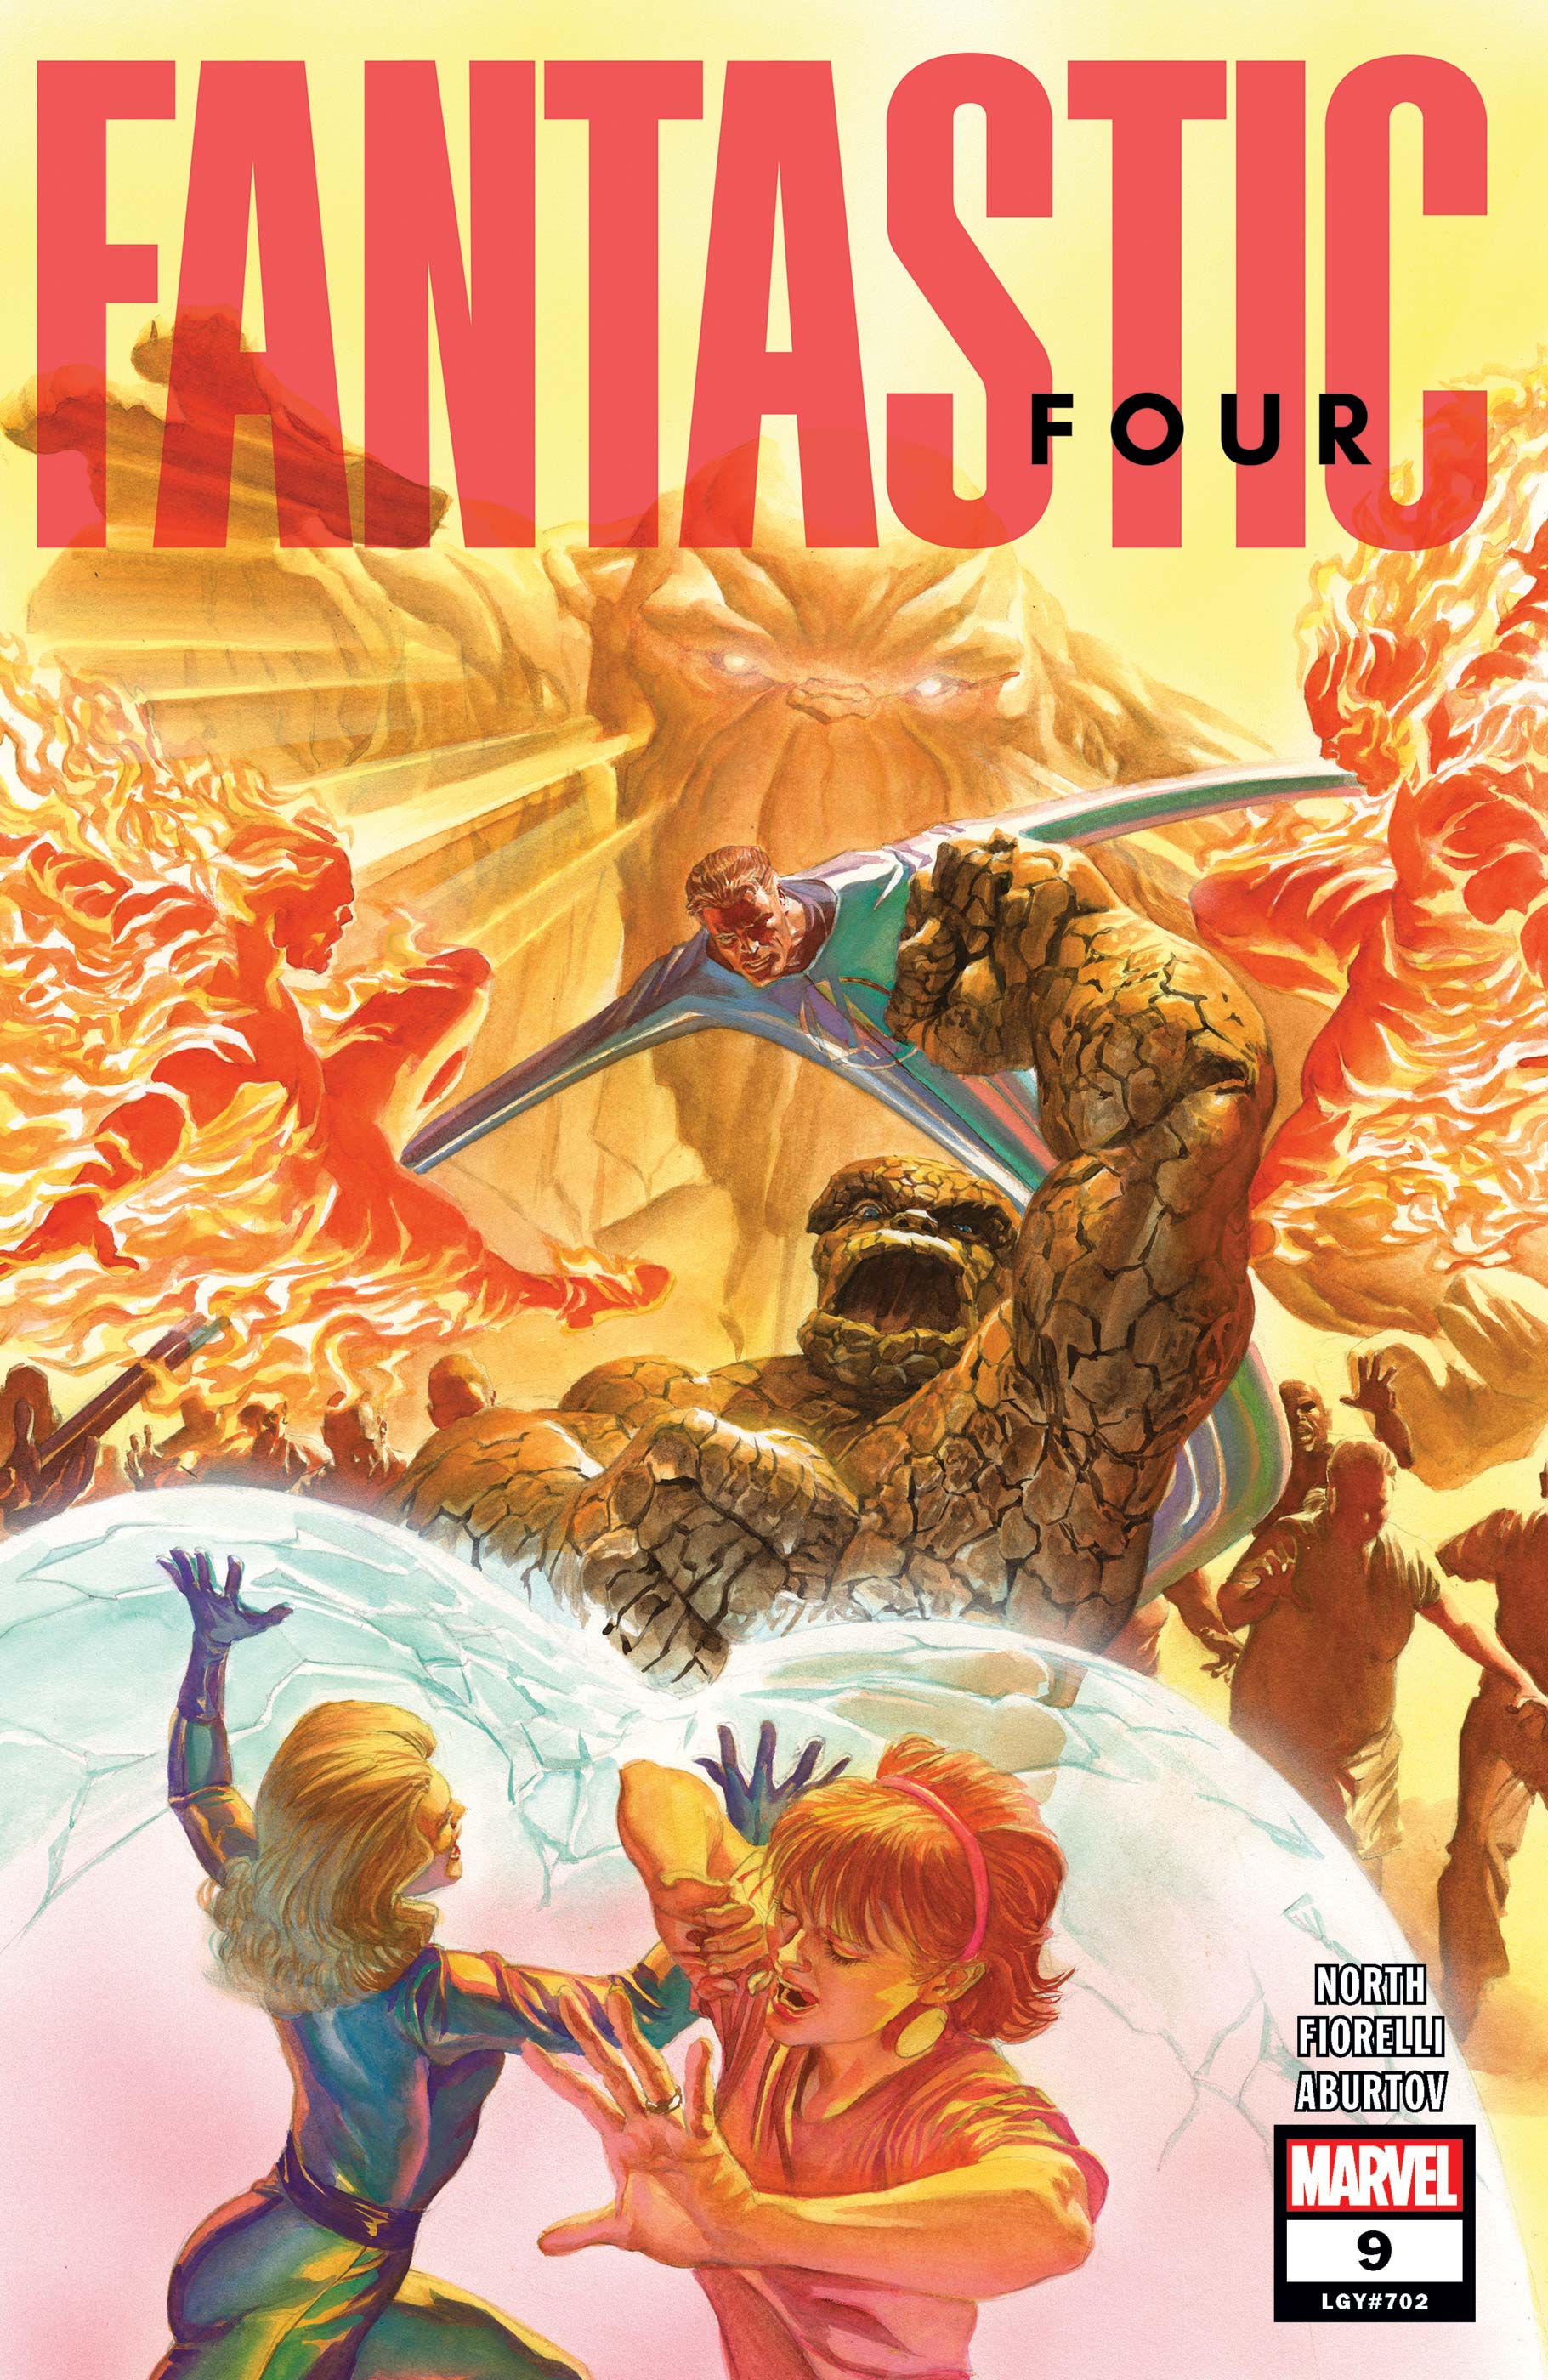 Fantastic Four (2022) #9